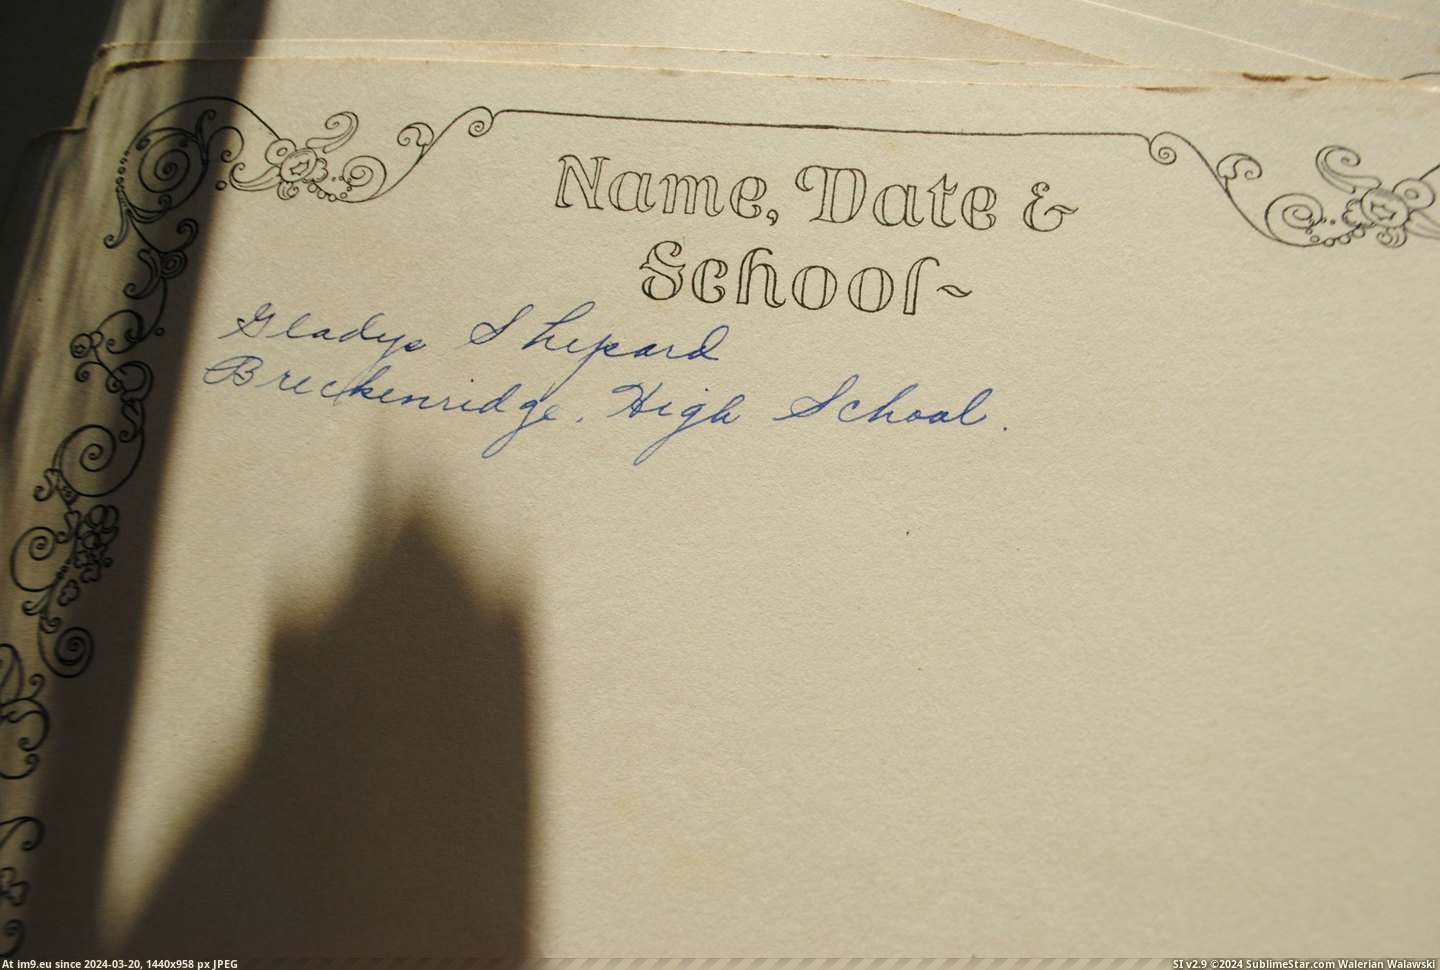 #Girls #High #Old #Barn #Diaries #Two #School #Wooden [Mildlyinteresting] I found the diaries of two high school girls from the 1920's in an old wooden barn. 34 Pic. (Bild von album My r/MILDLYINTERESTING favs))